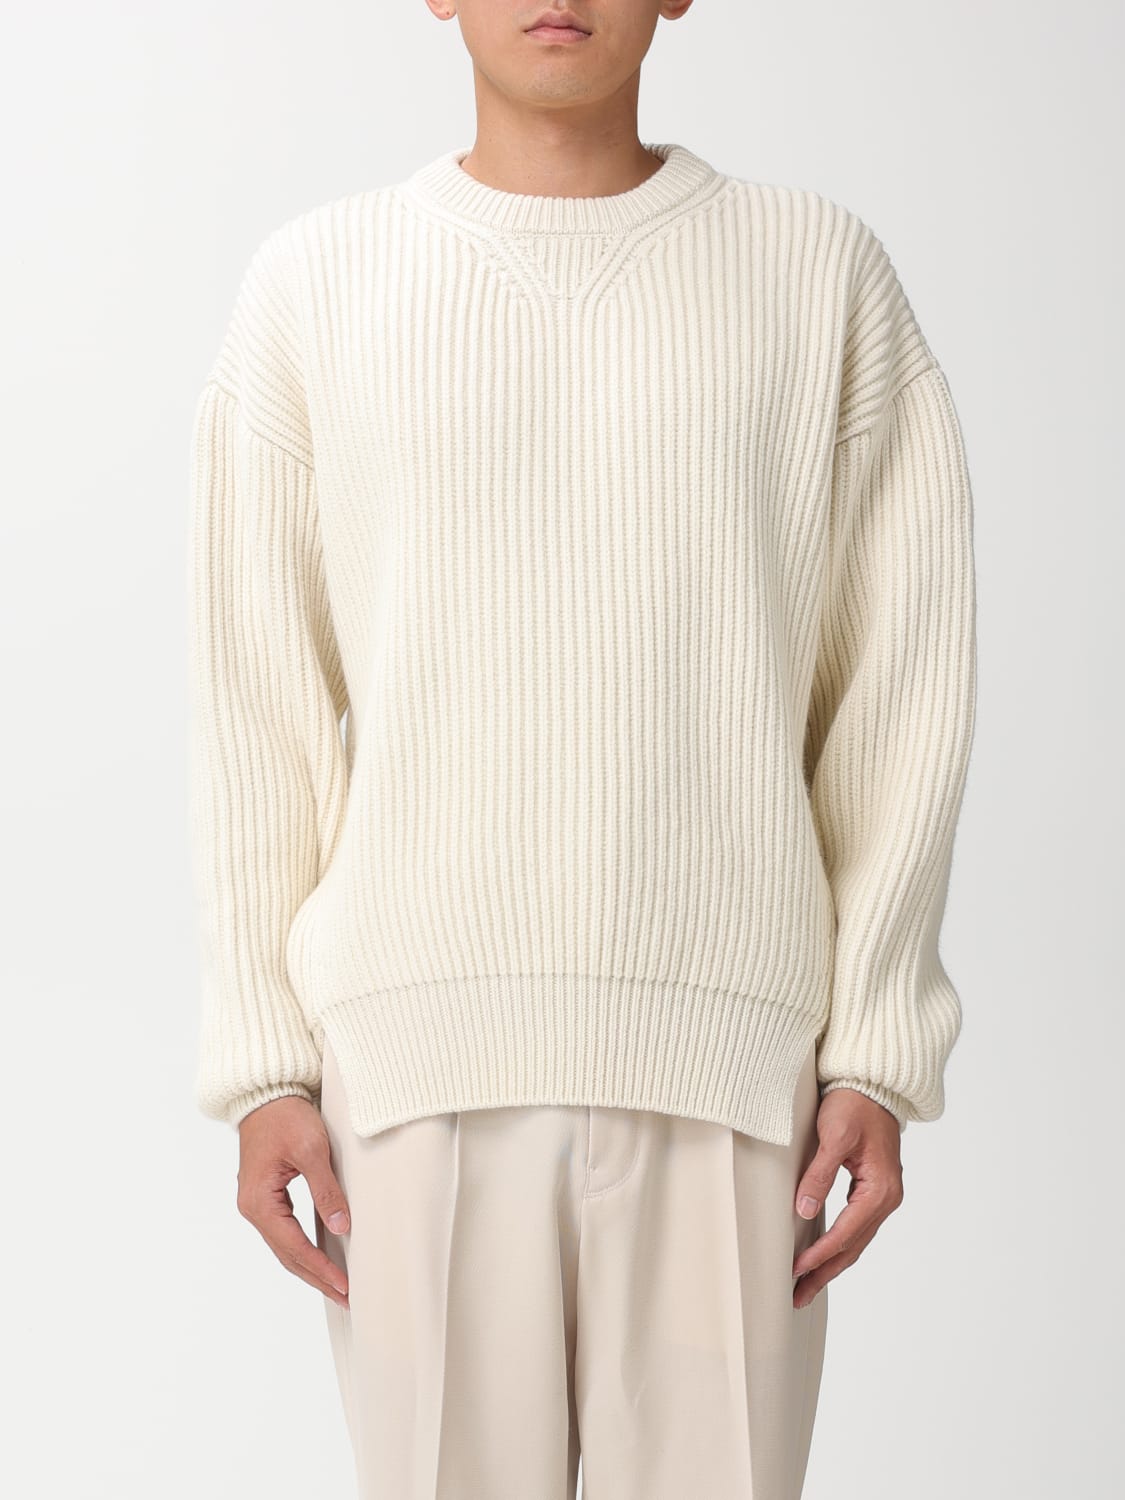 JIL SANDER: sweater for man - White | Jil Sander sweater